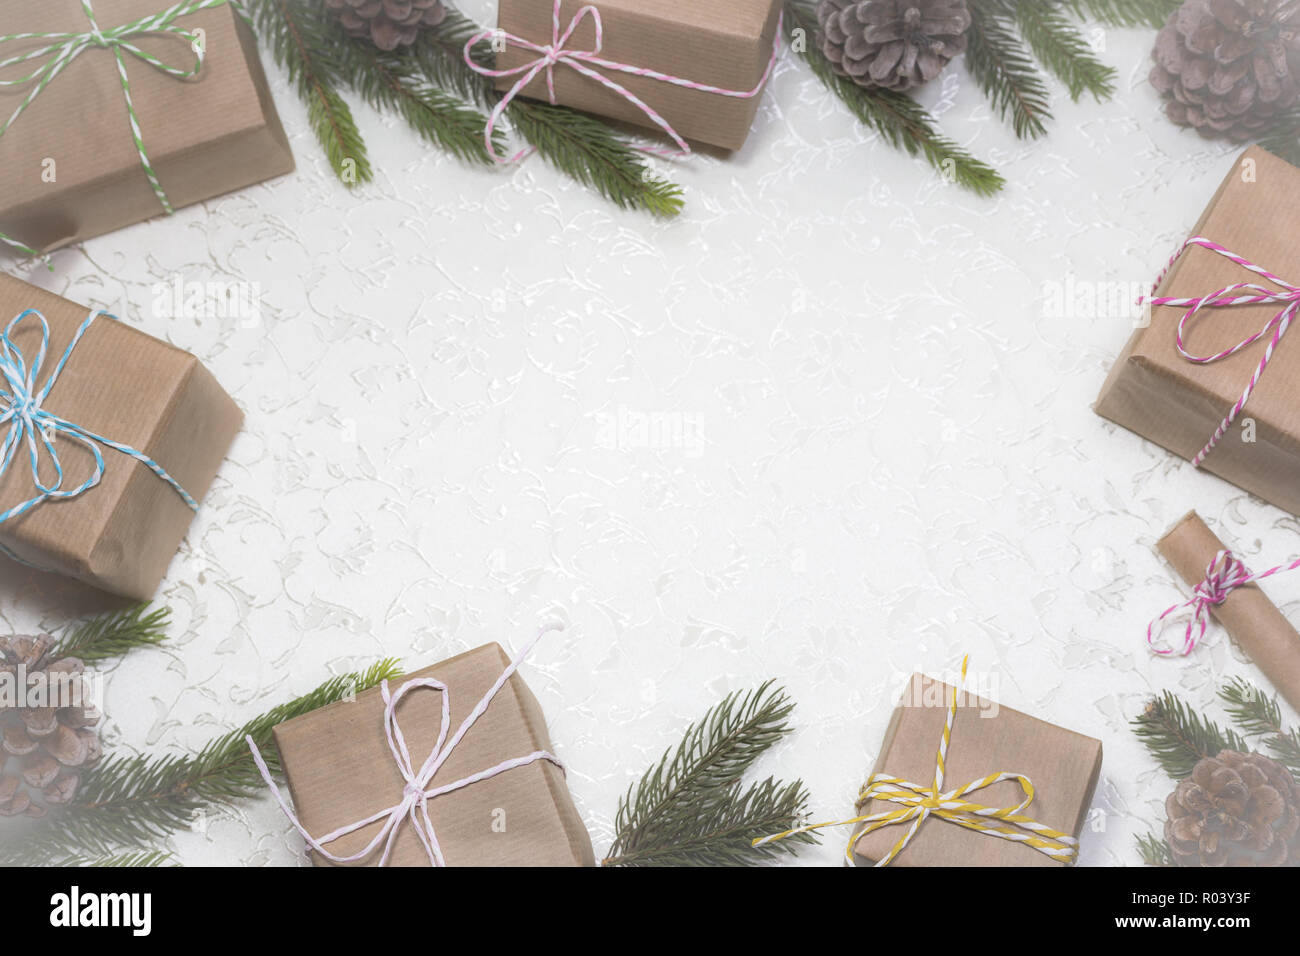 Flat Lay Christmas Cookies Baking Pan Christmas Wreath Cardboard Box Stock  Photo by ©VadimVasenin 223910120